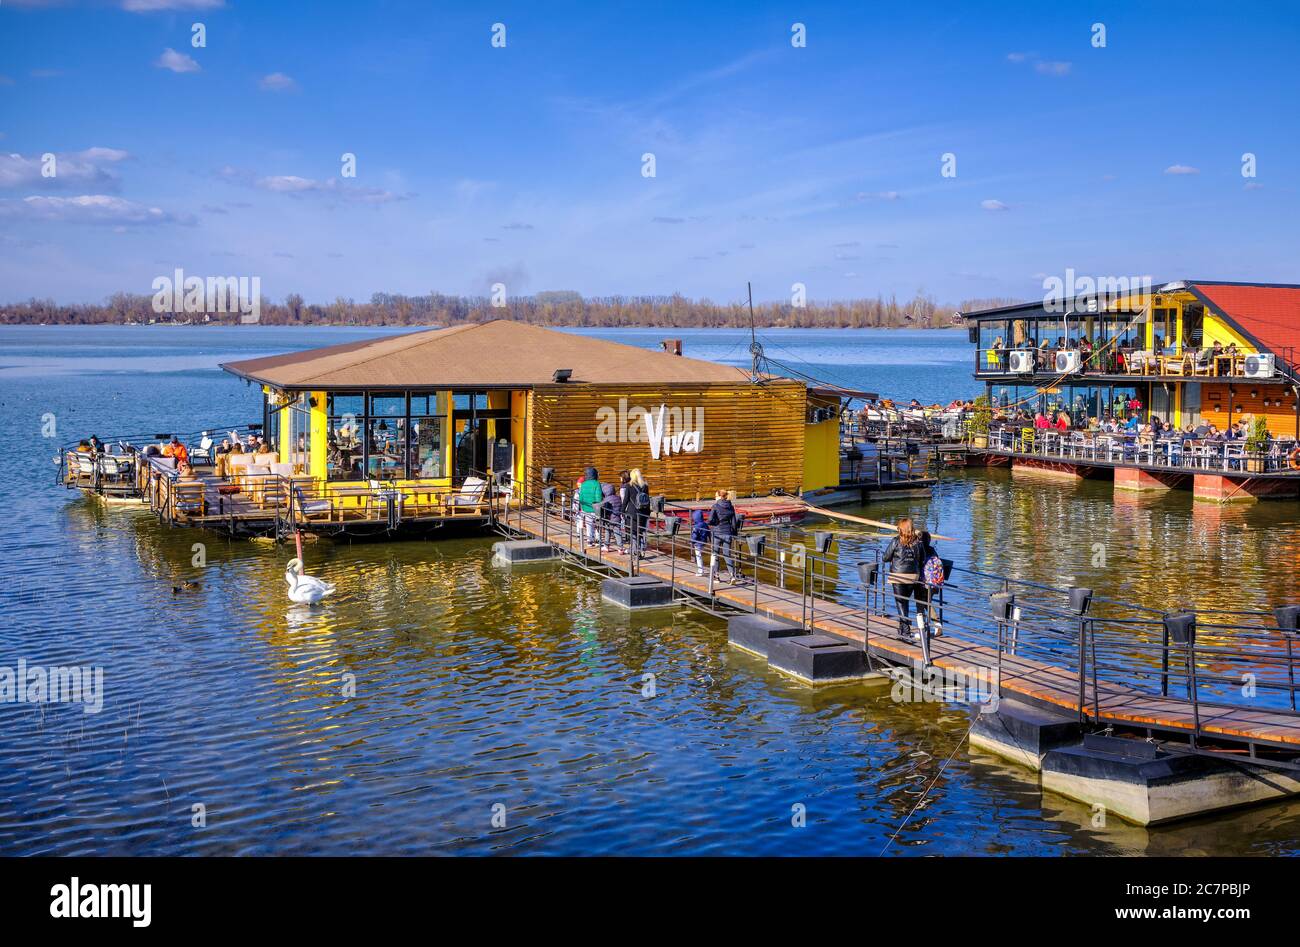 Belgrade / Serbia - February 22, 2020: River raft restaurants and bars on the Danube river in Belgrade, Serbia Stock Photo